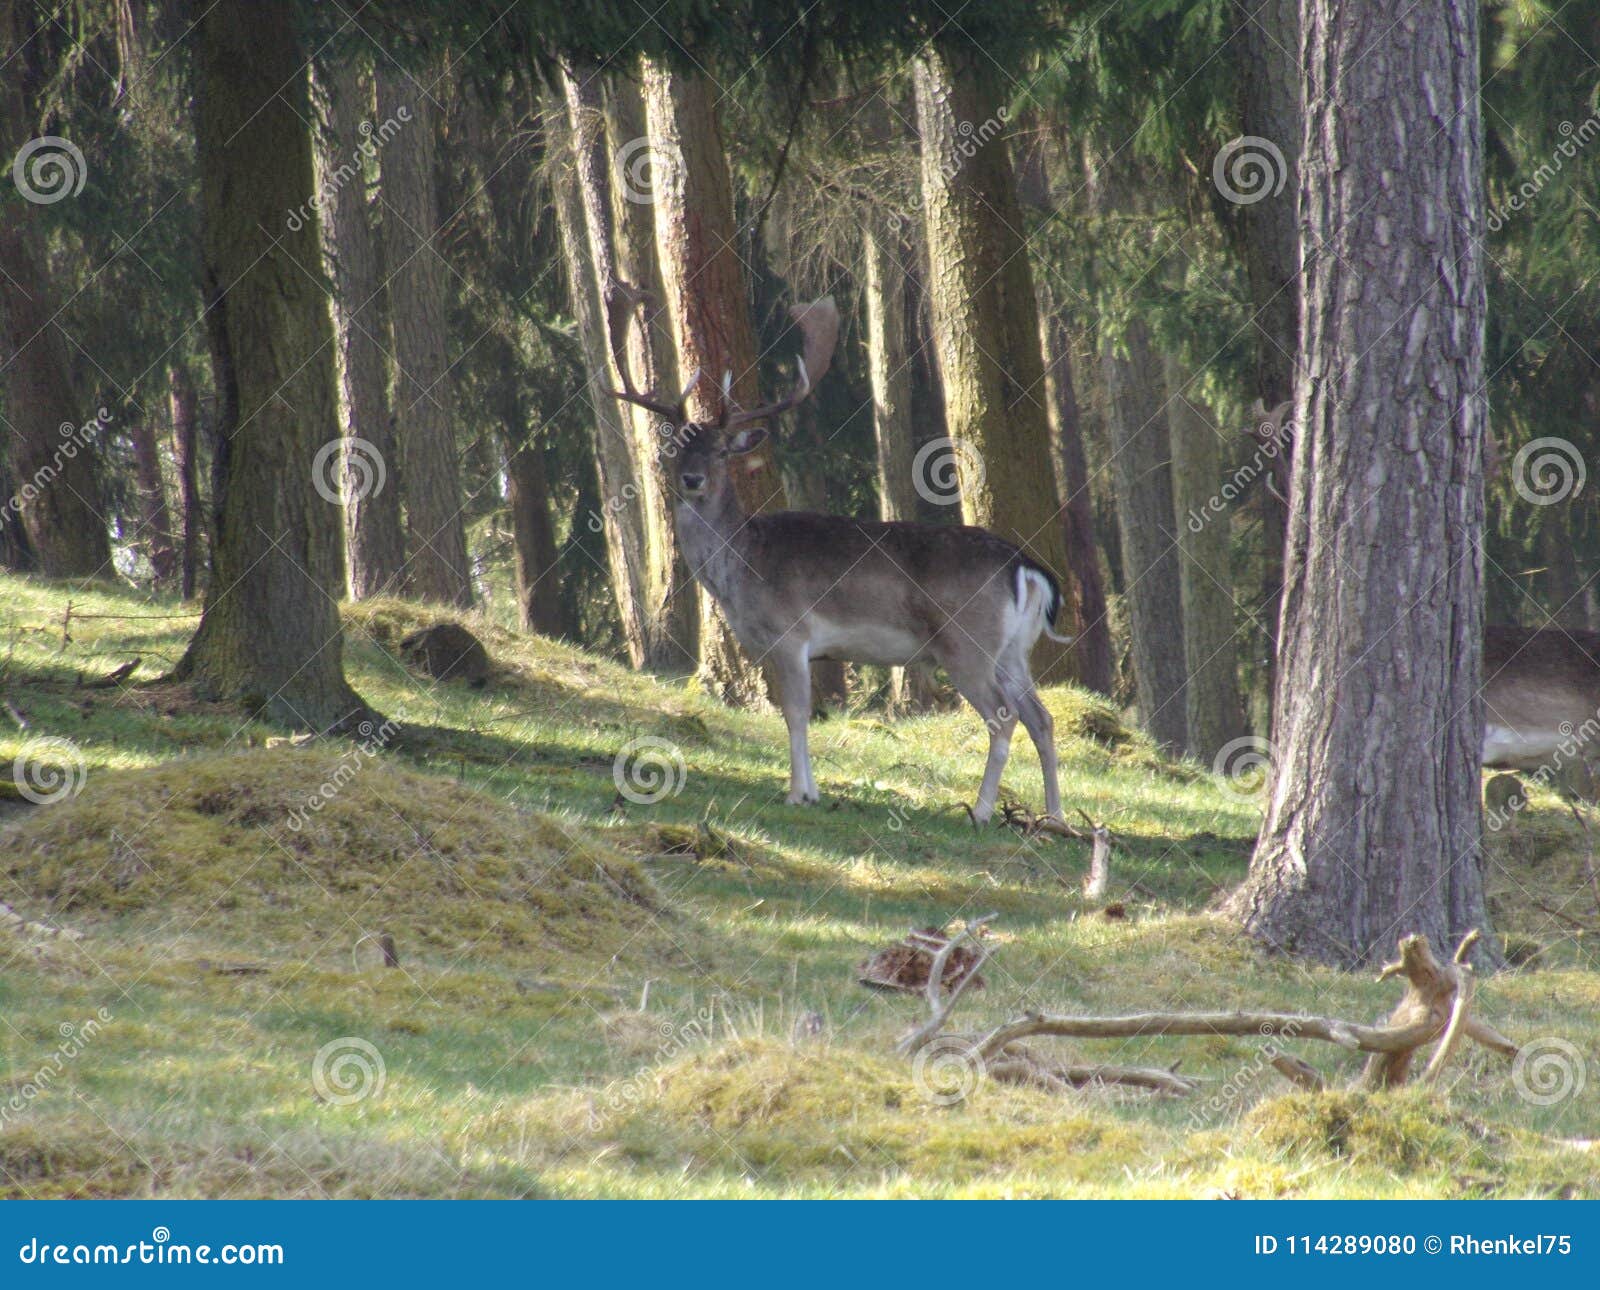 hirsch im wald in nordhessen / deer in the forest in northern hesse